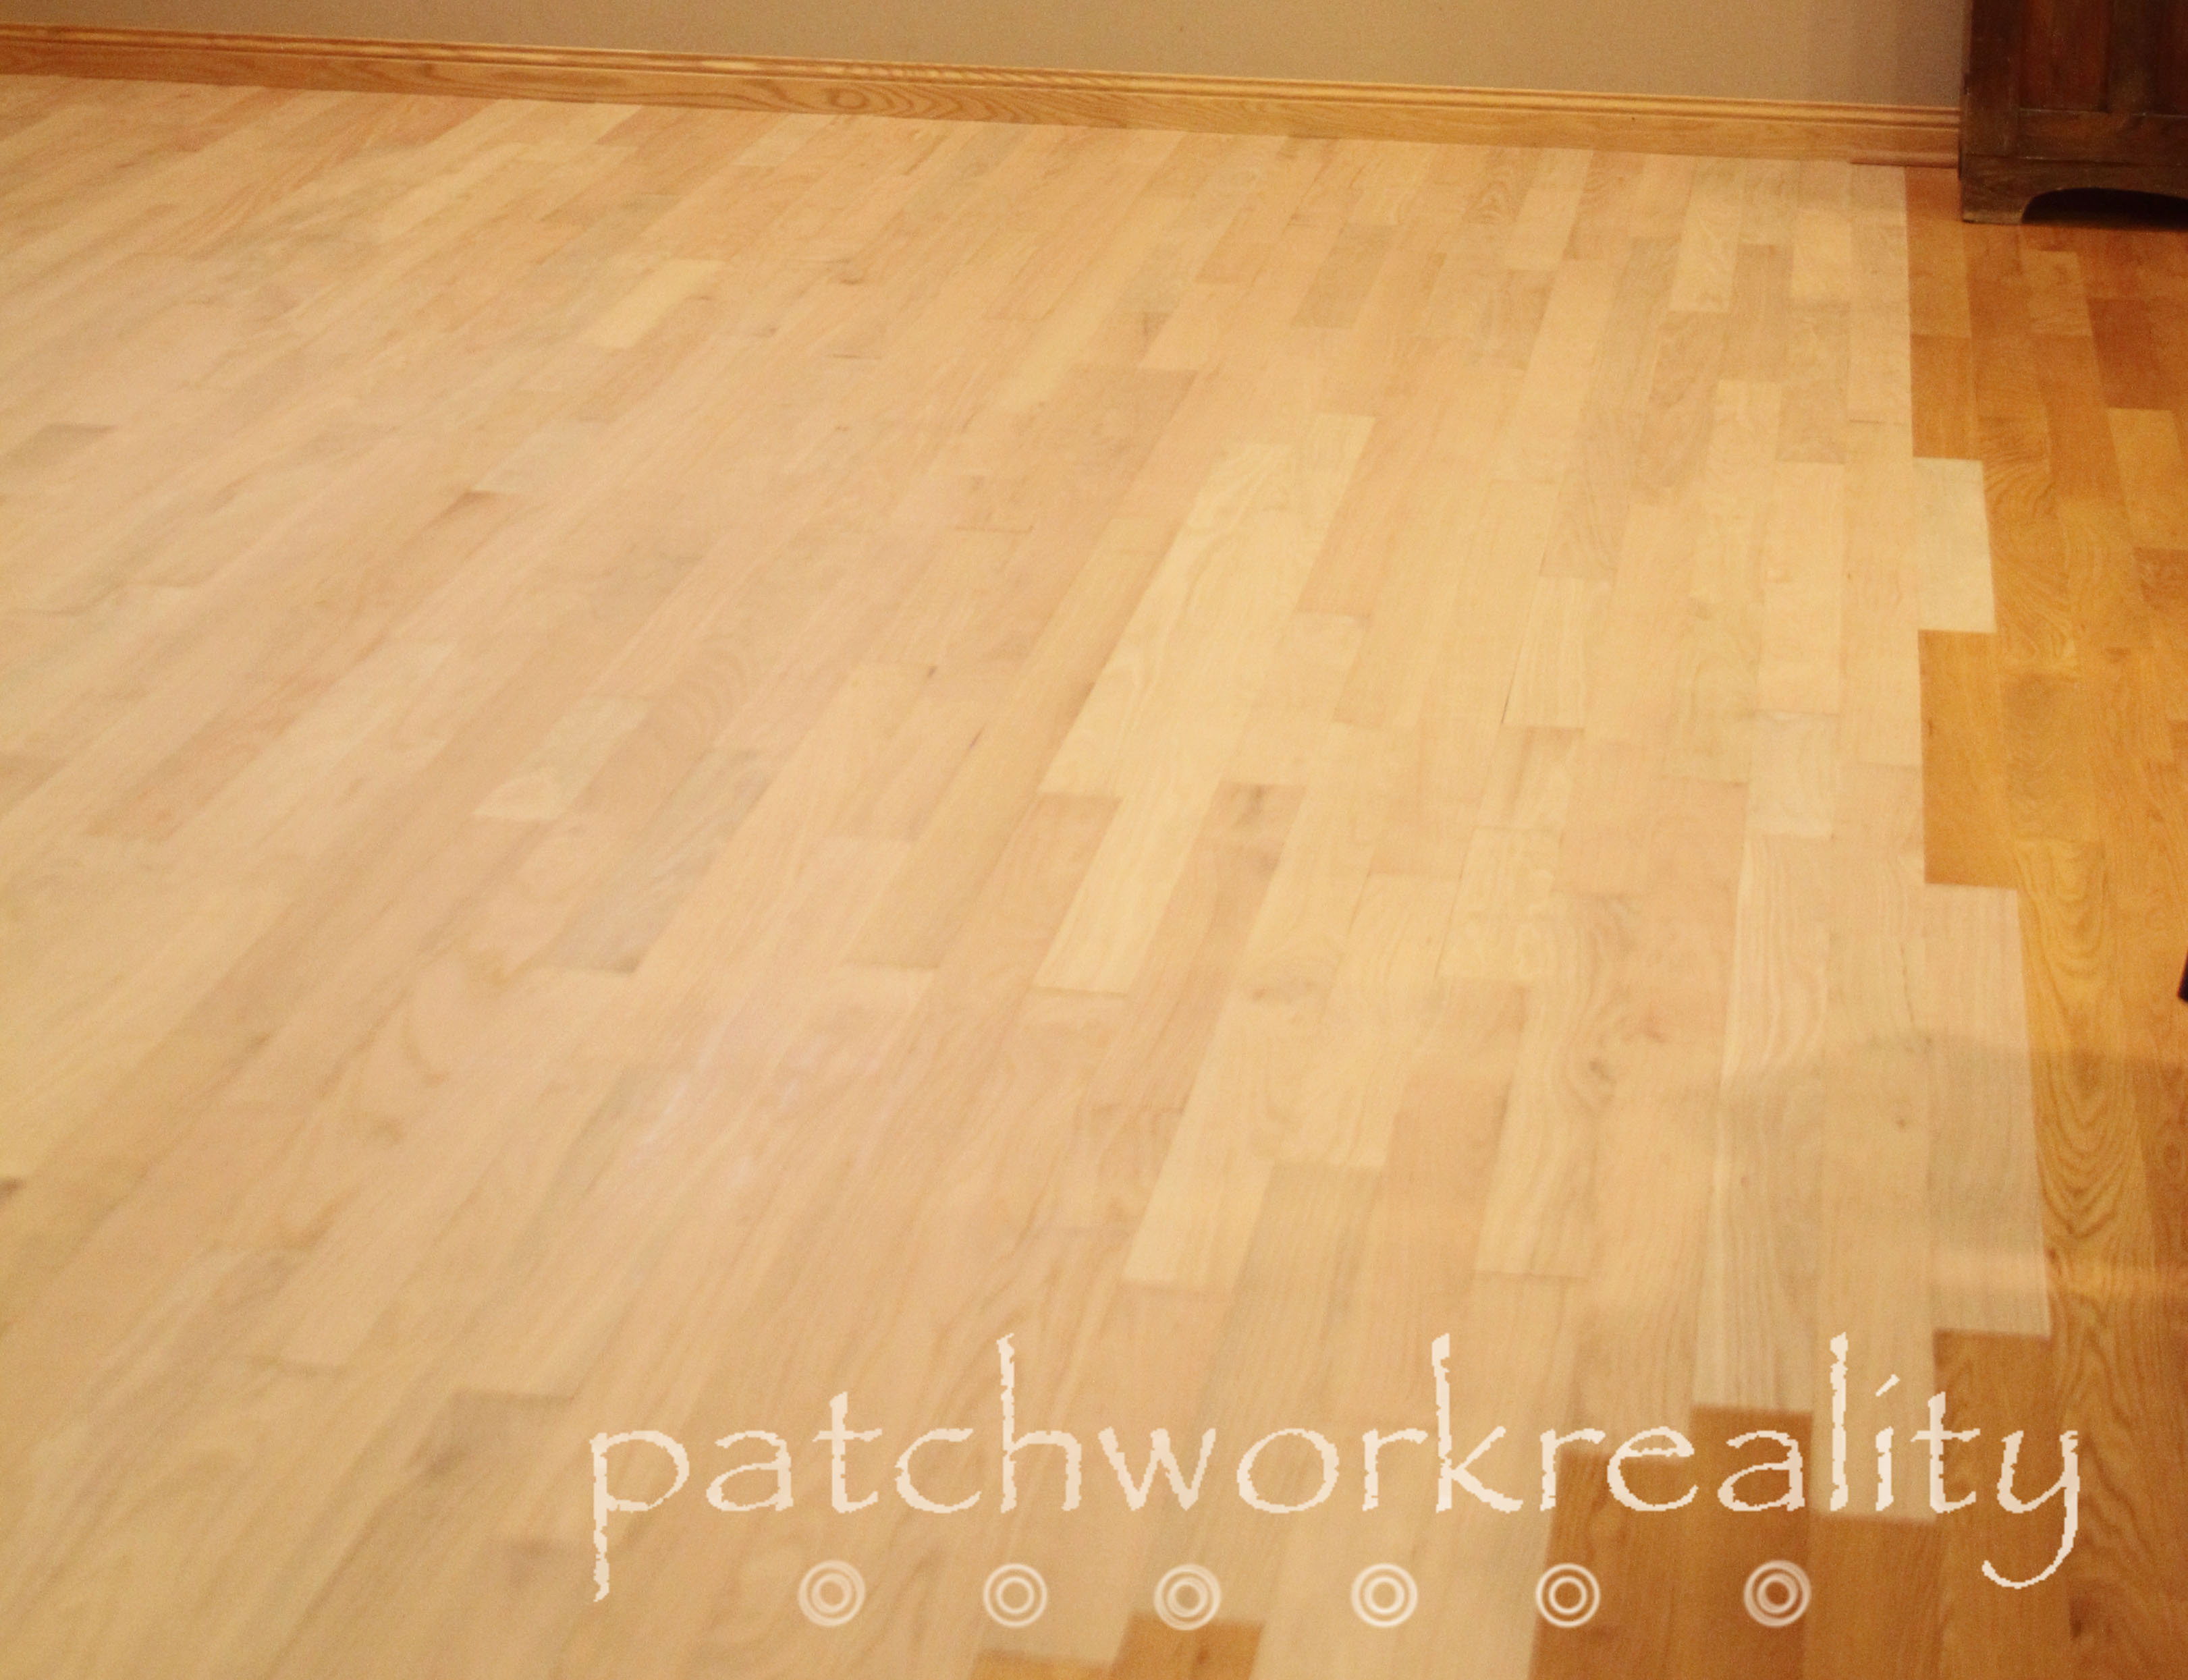 lumber liquidators hardwood floor nailer of hardwood patchwork reality within oak flooring